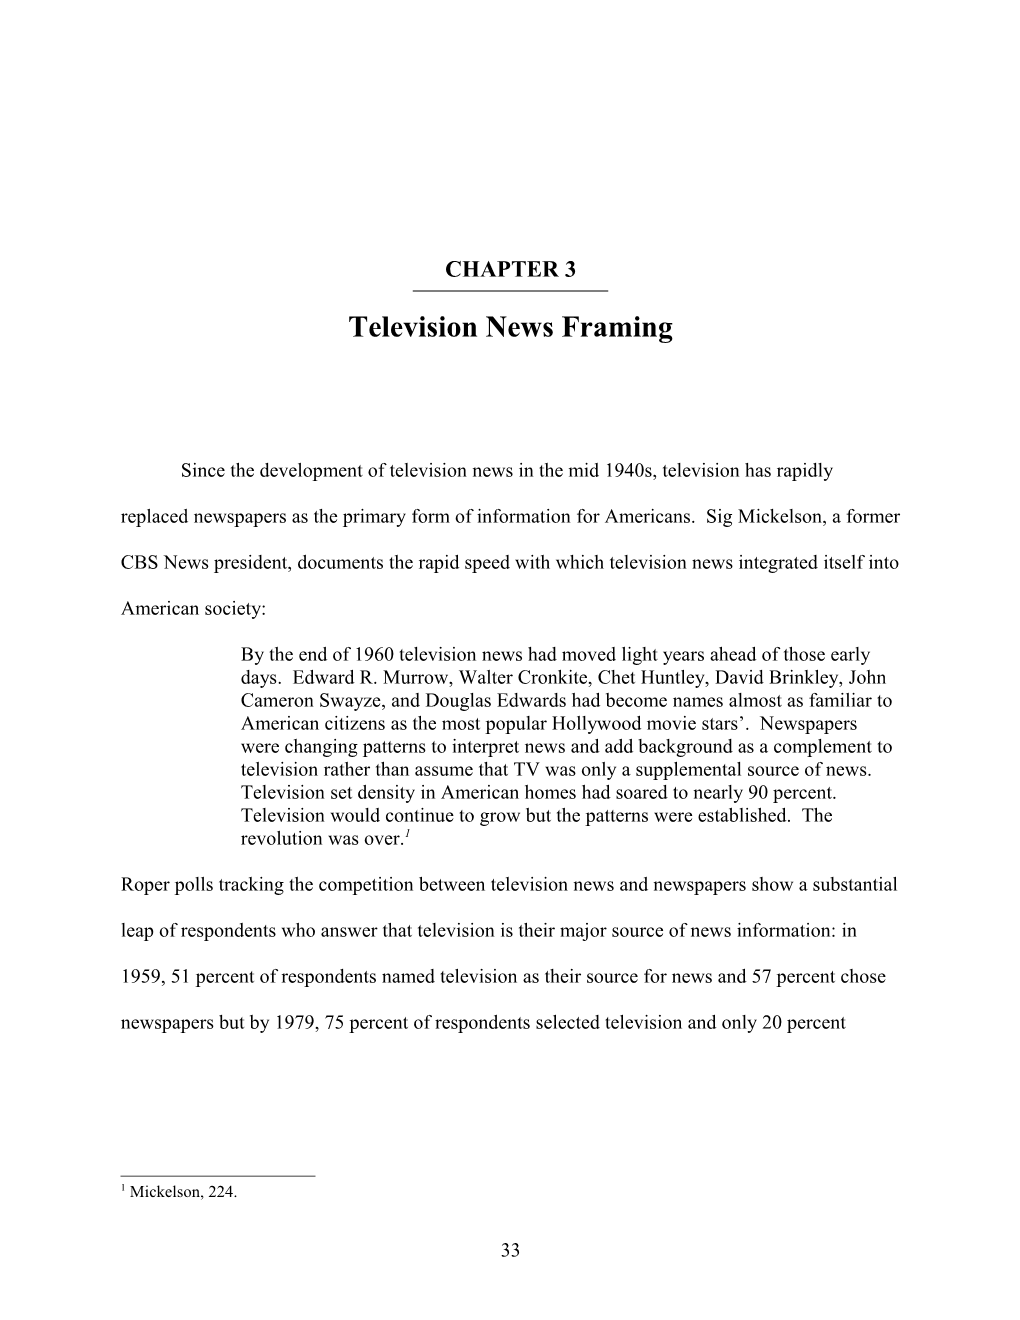 Chapter 3: Television News Framing